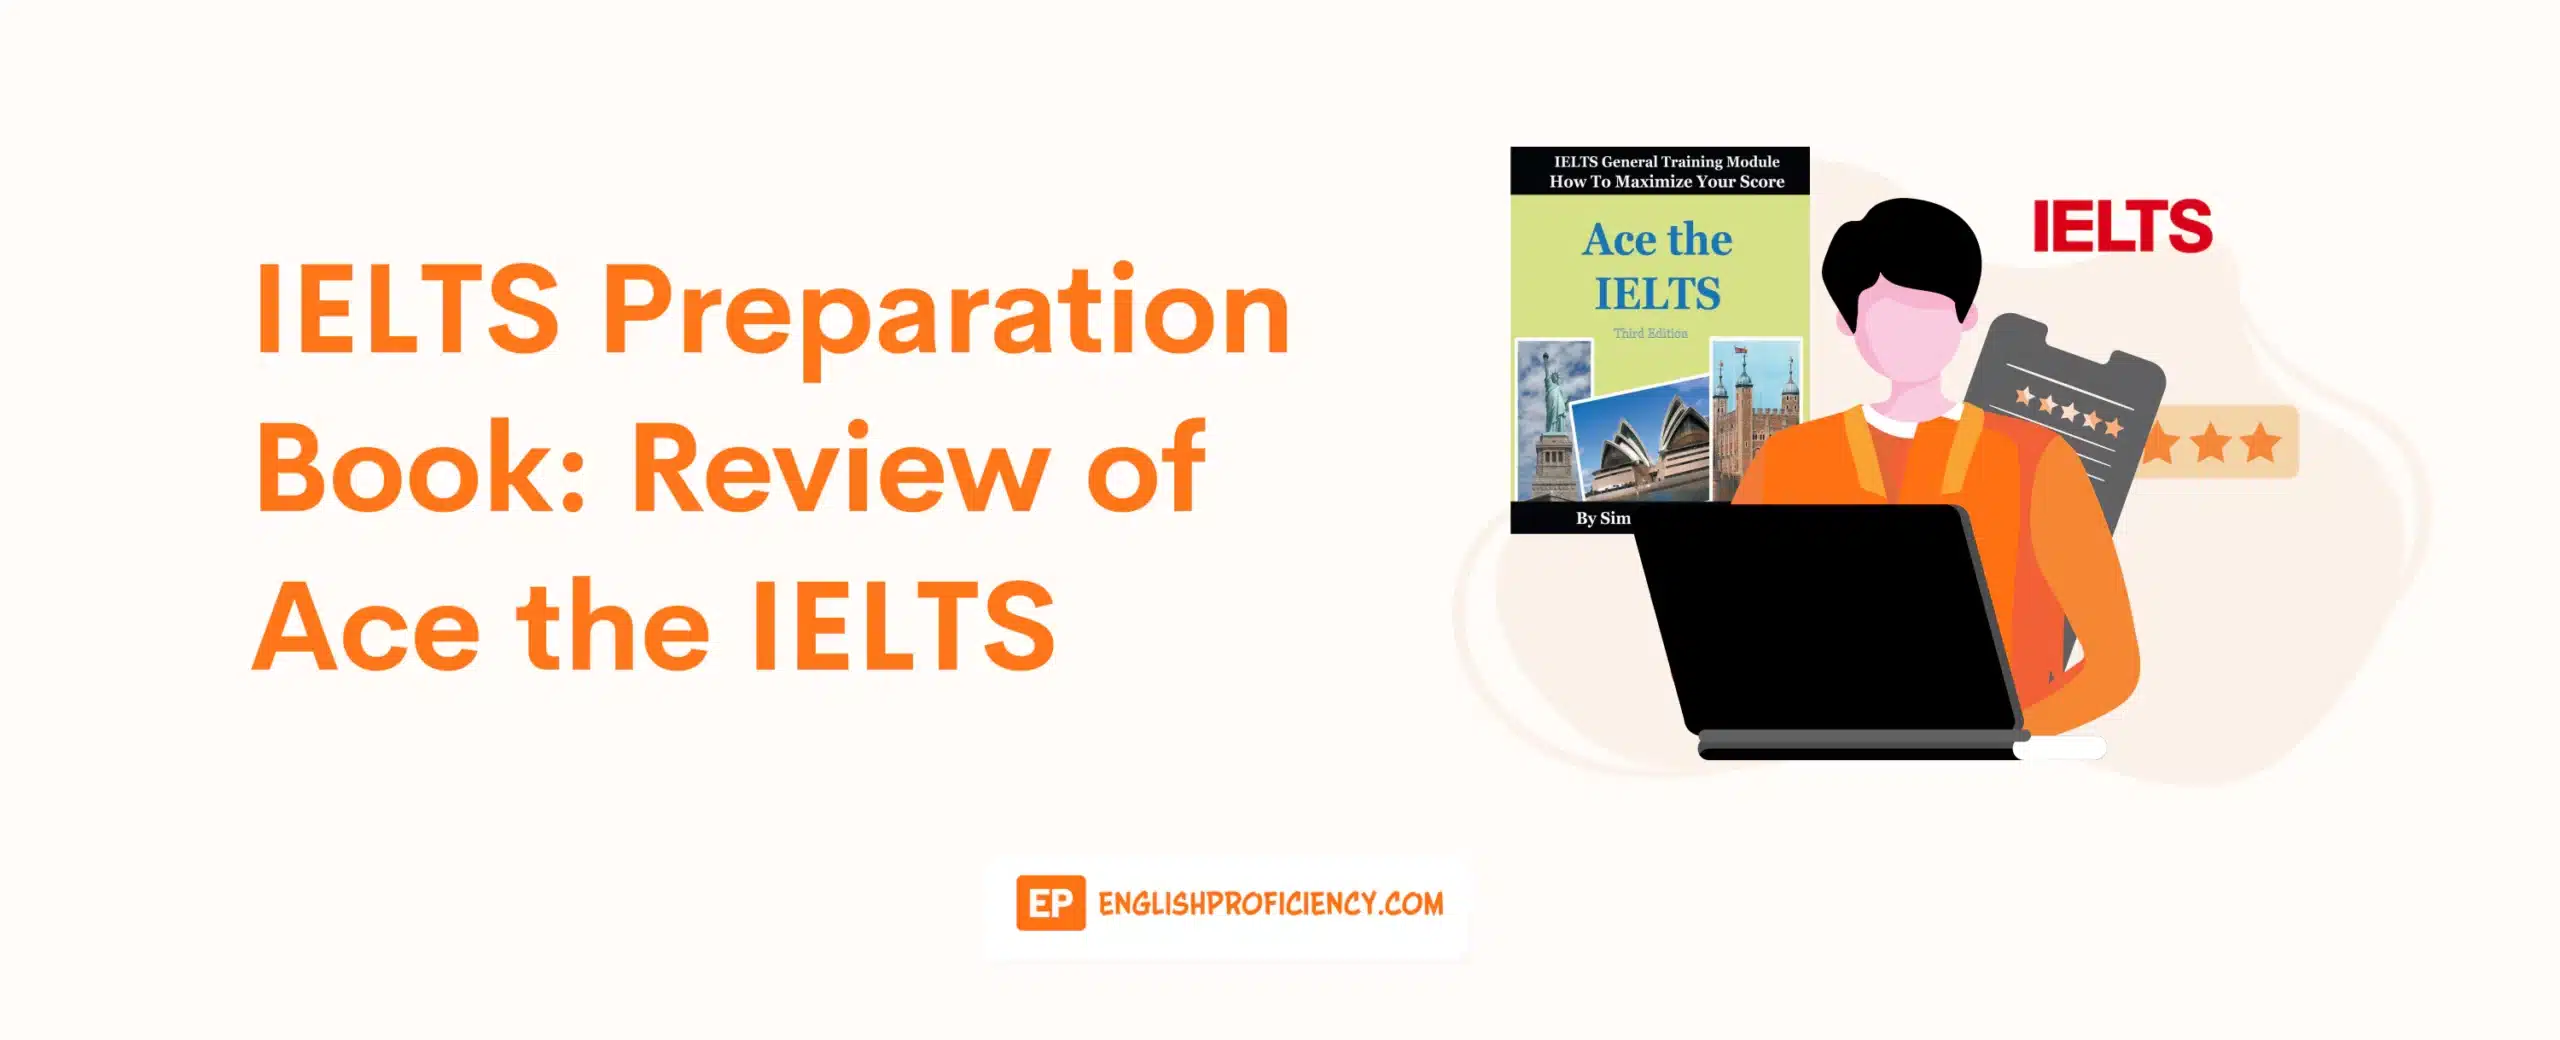 IELTS Preparation Book Review of Ace the IELTS